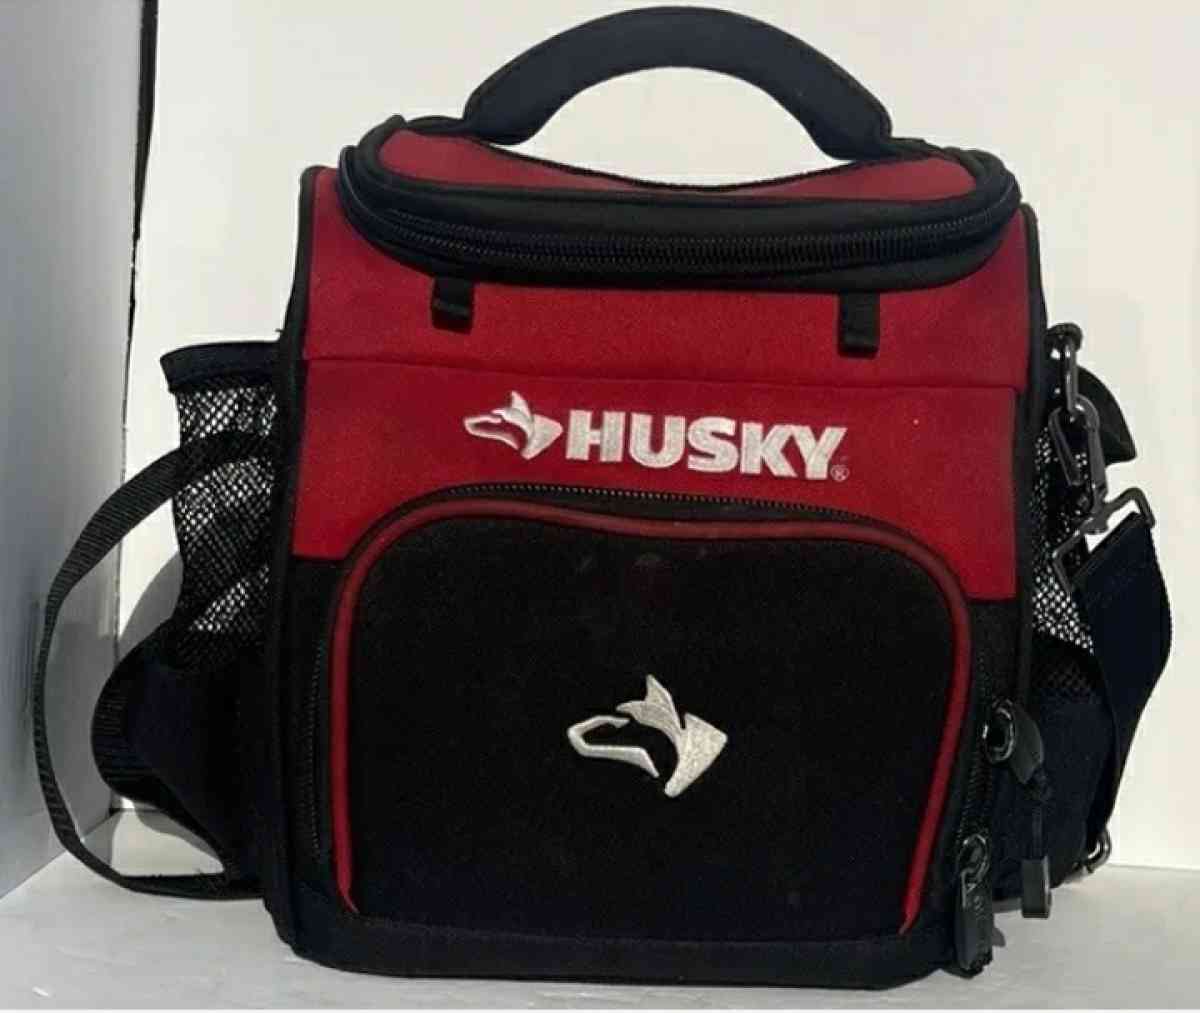 Husky waterproof lunch bag